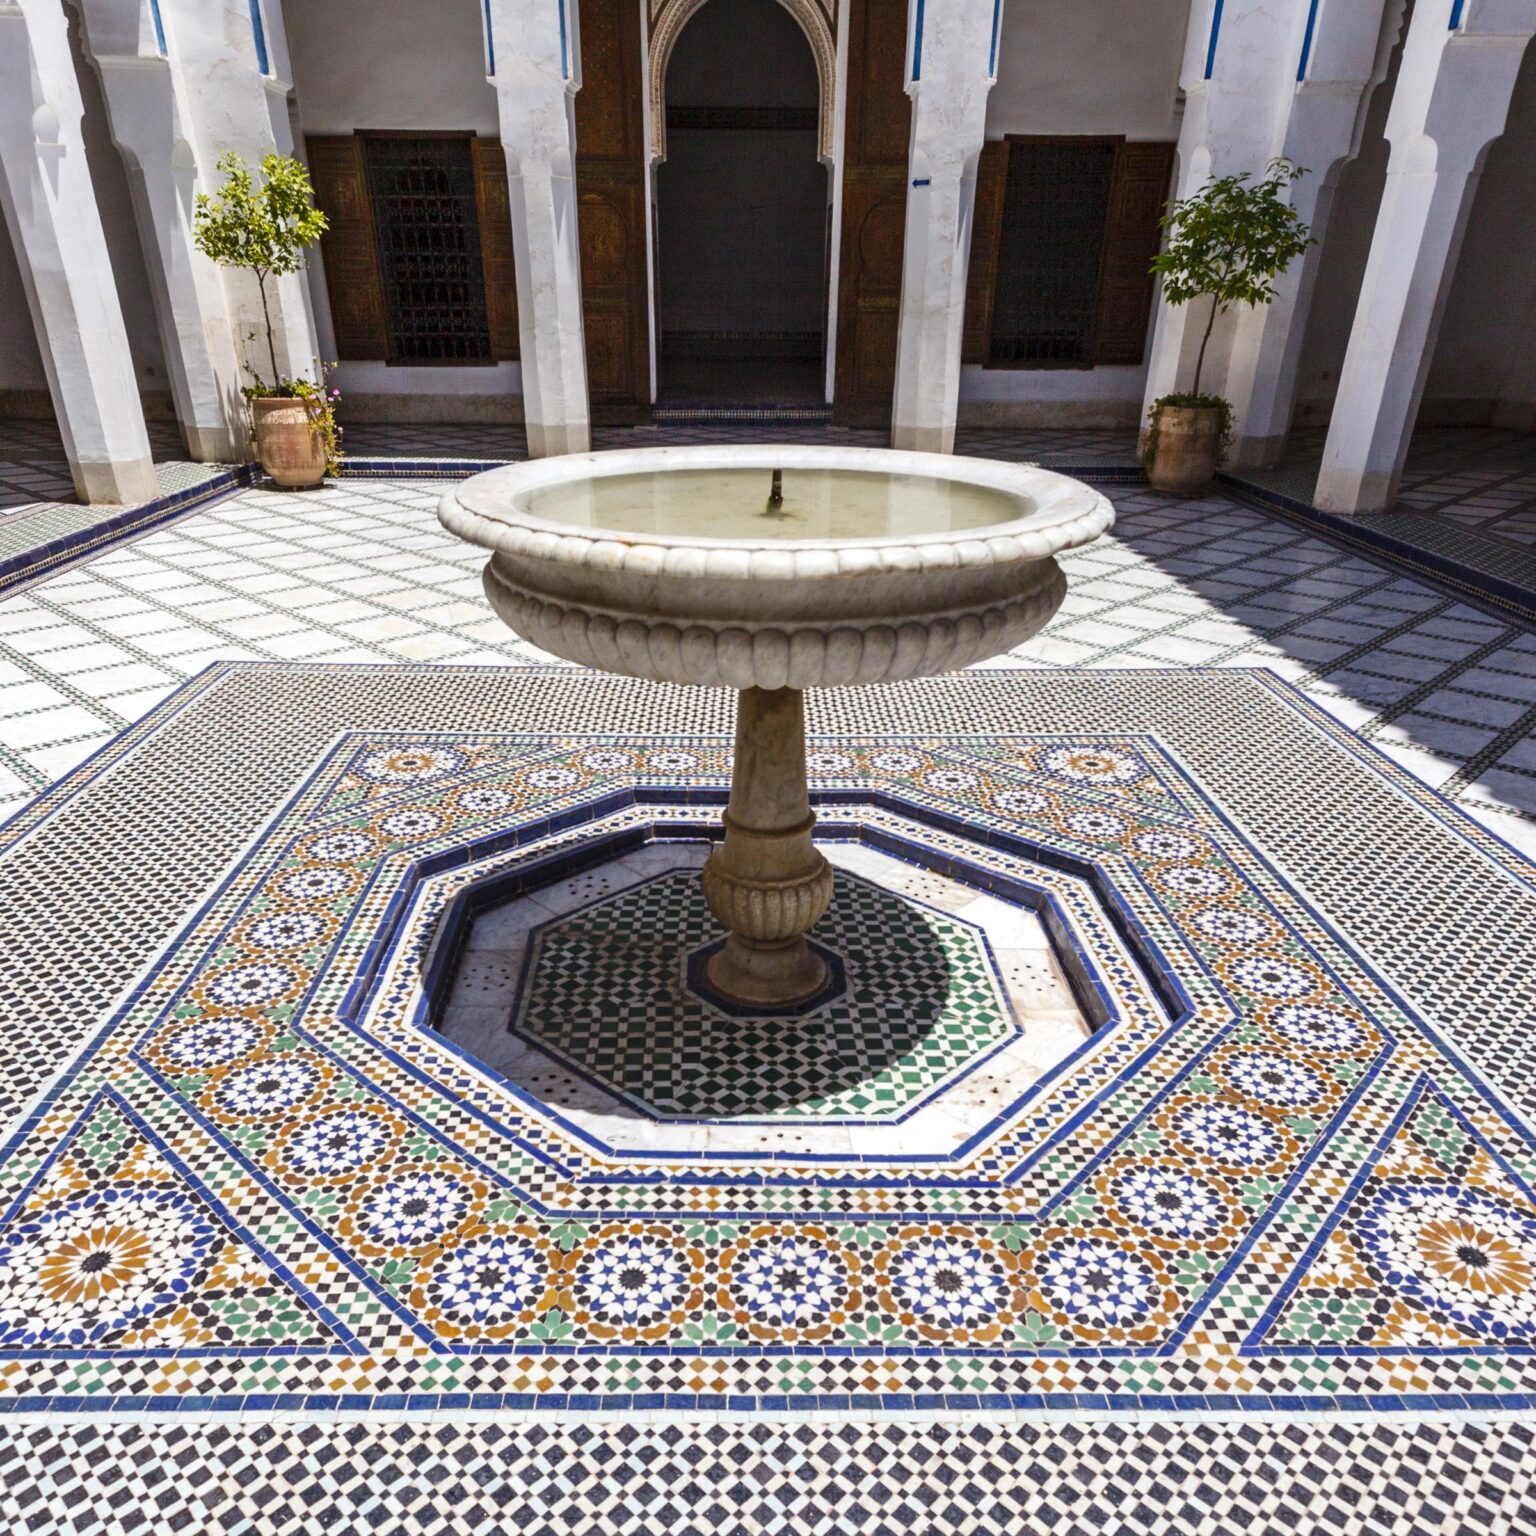 Courtyard of Bahia Palace in Marrakesh, Morocco